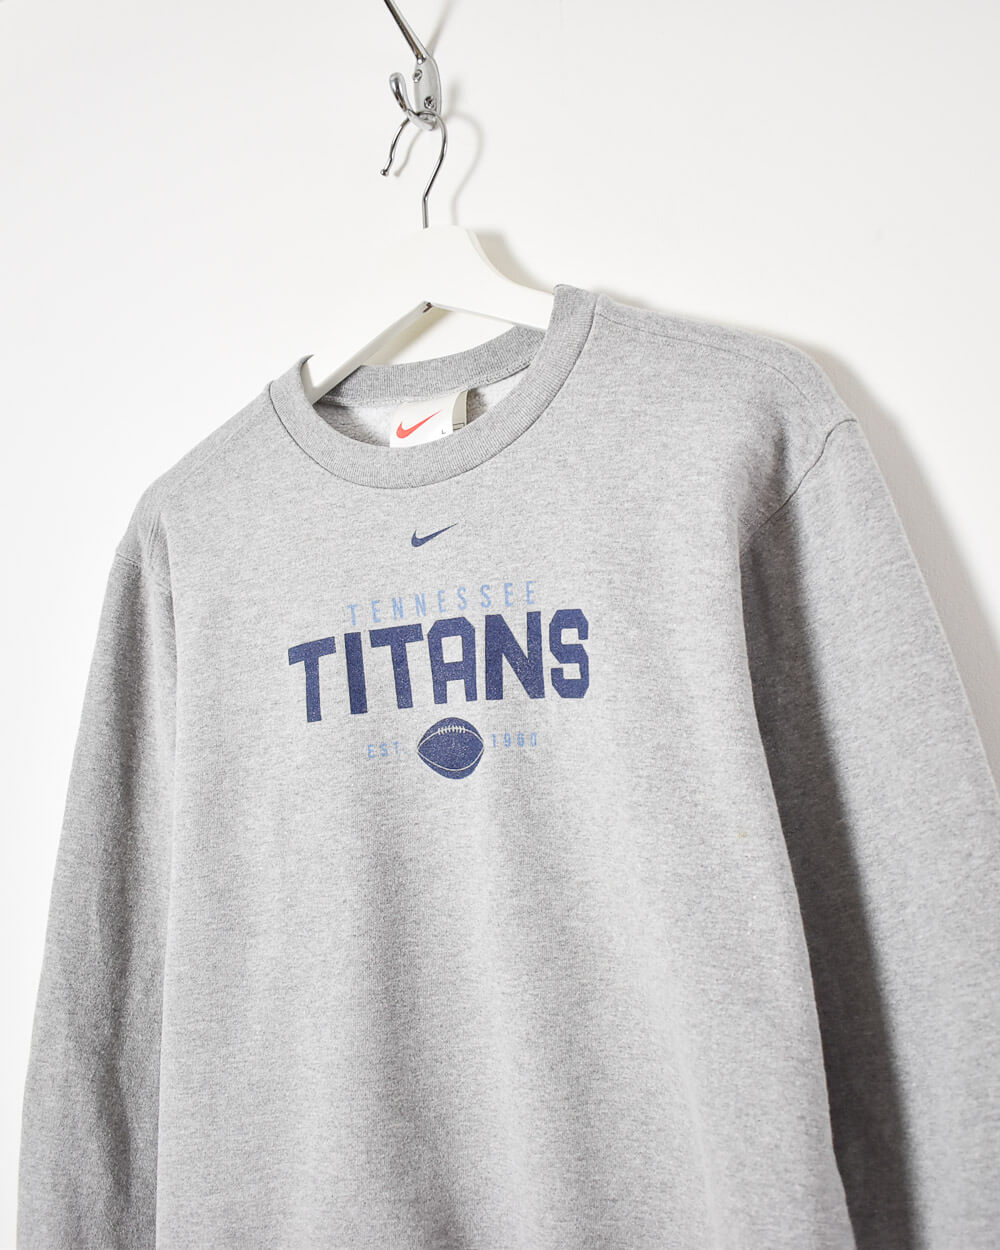 Stone Nike Tennessee Titans Sweatshirt - X-Small